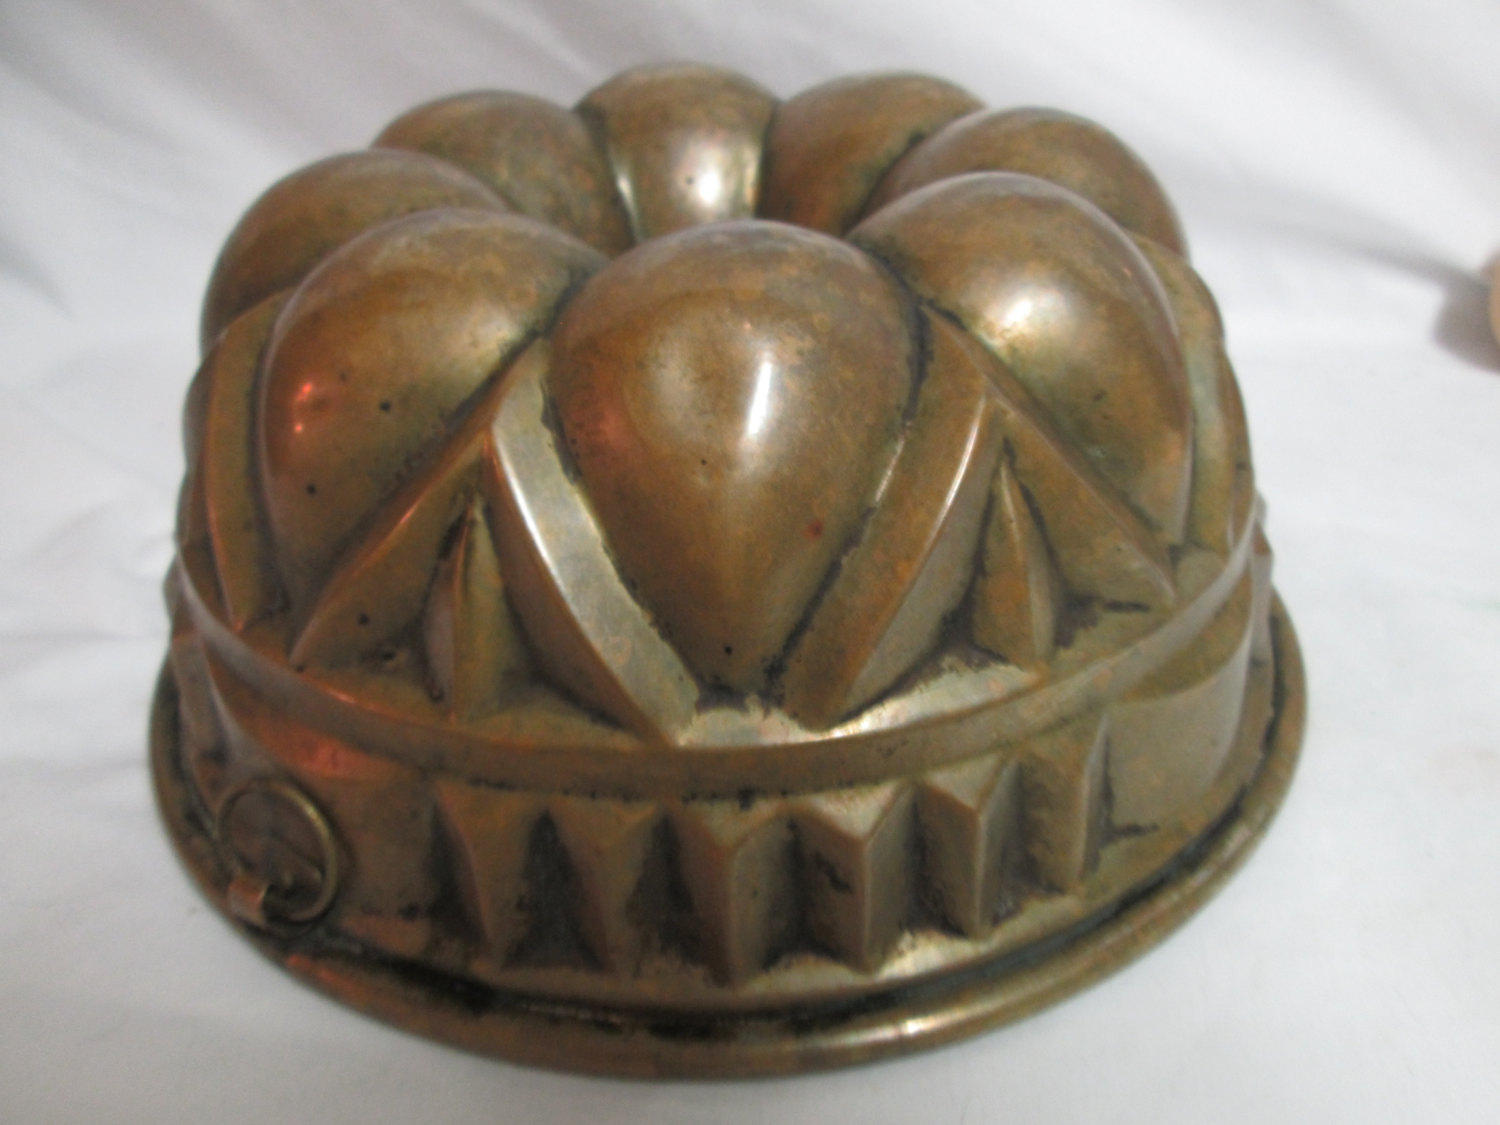 https://www.truevintageantiques.com/wp-content/uploads/2017/07/vintage-jello-cake-mold-heavy-copper-baking-pan-ornate-detail-brass-ring-for-hanging-original-patina-595c34921.jpg